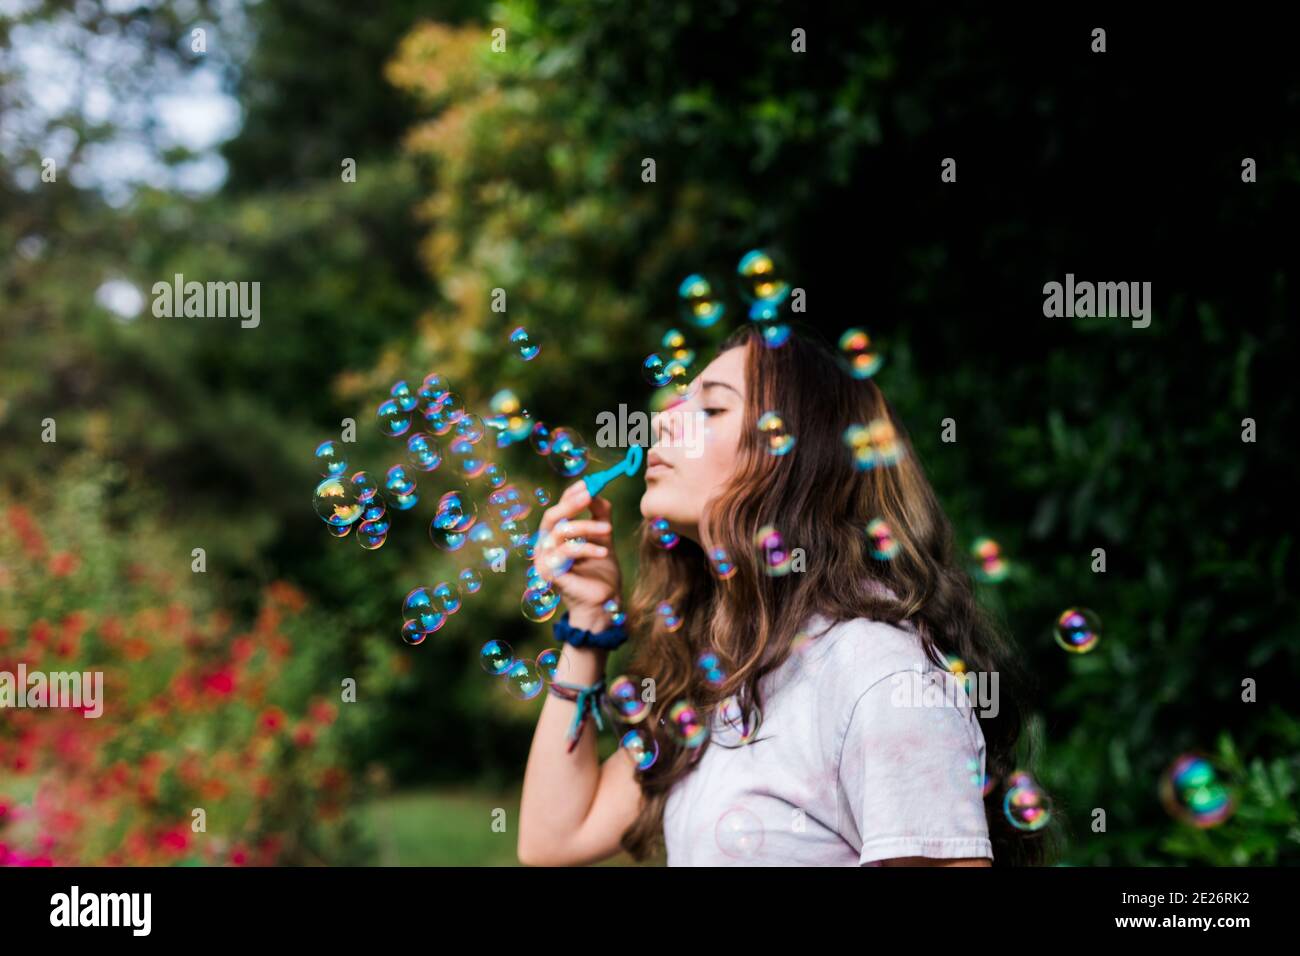 Bubbles Foto von Lenka Vodicka of Lenkaland Fotografie Stockfoto